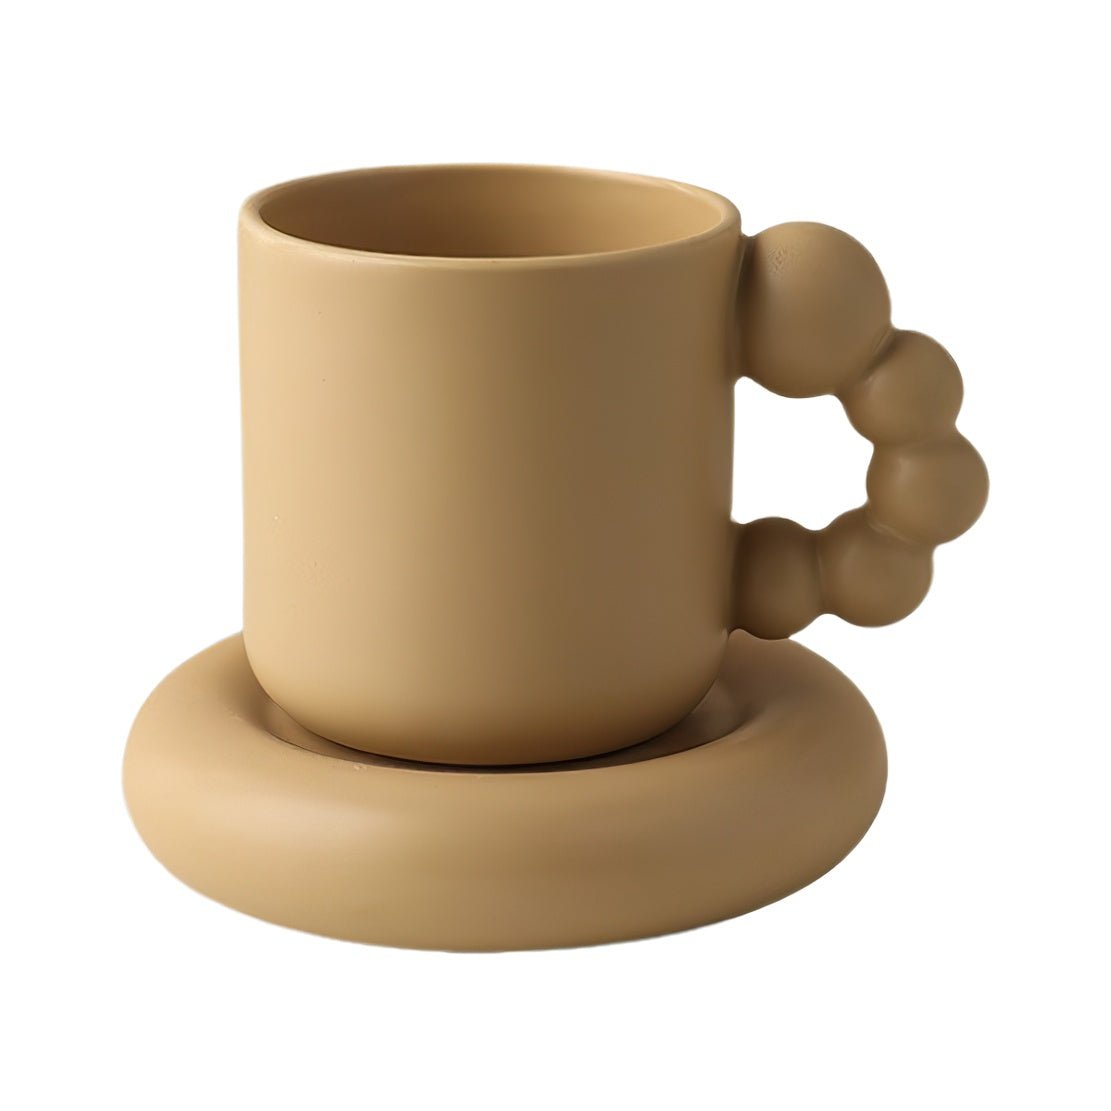 Beige ceramic pearl handle mug with matching saucer